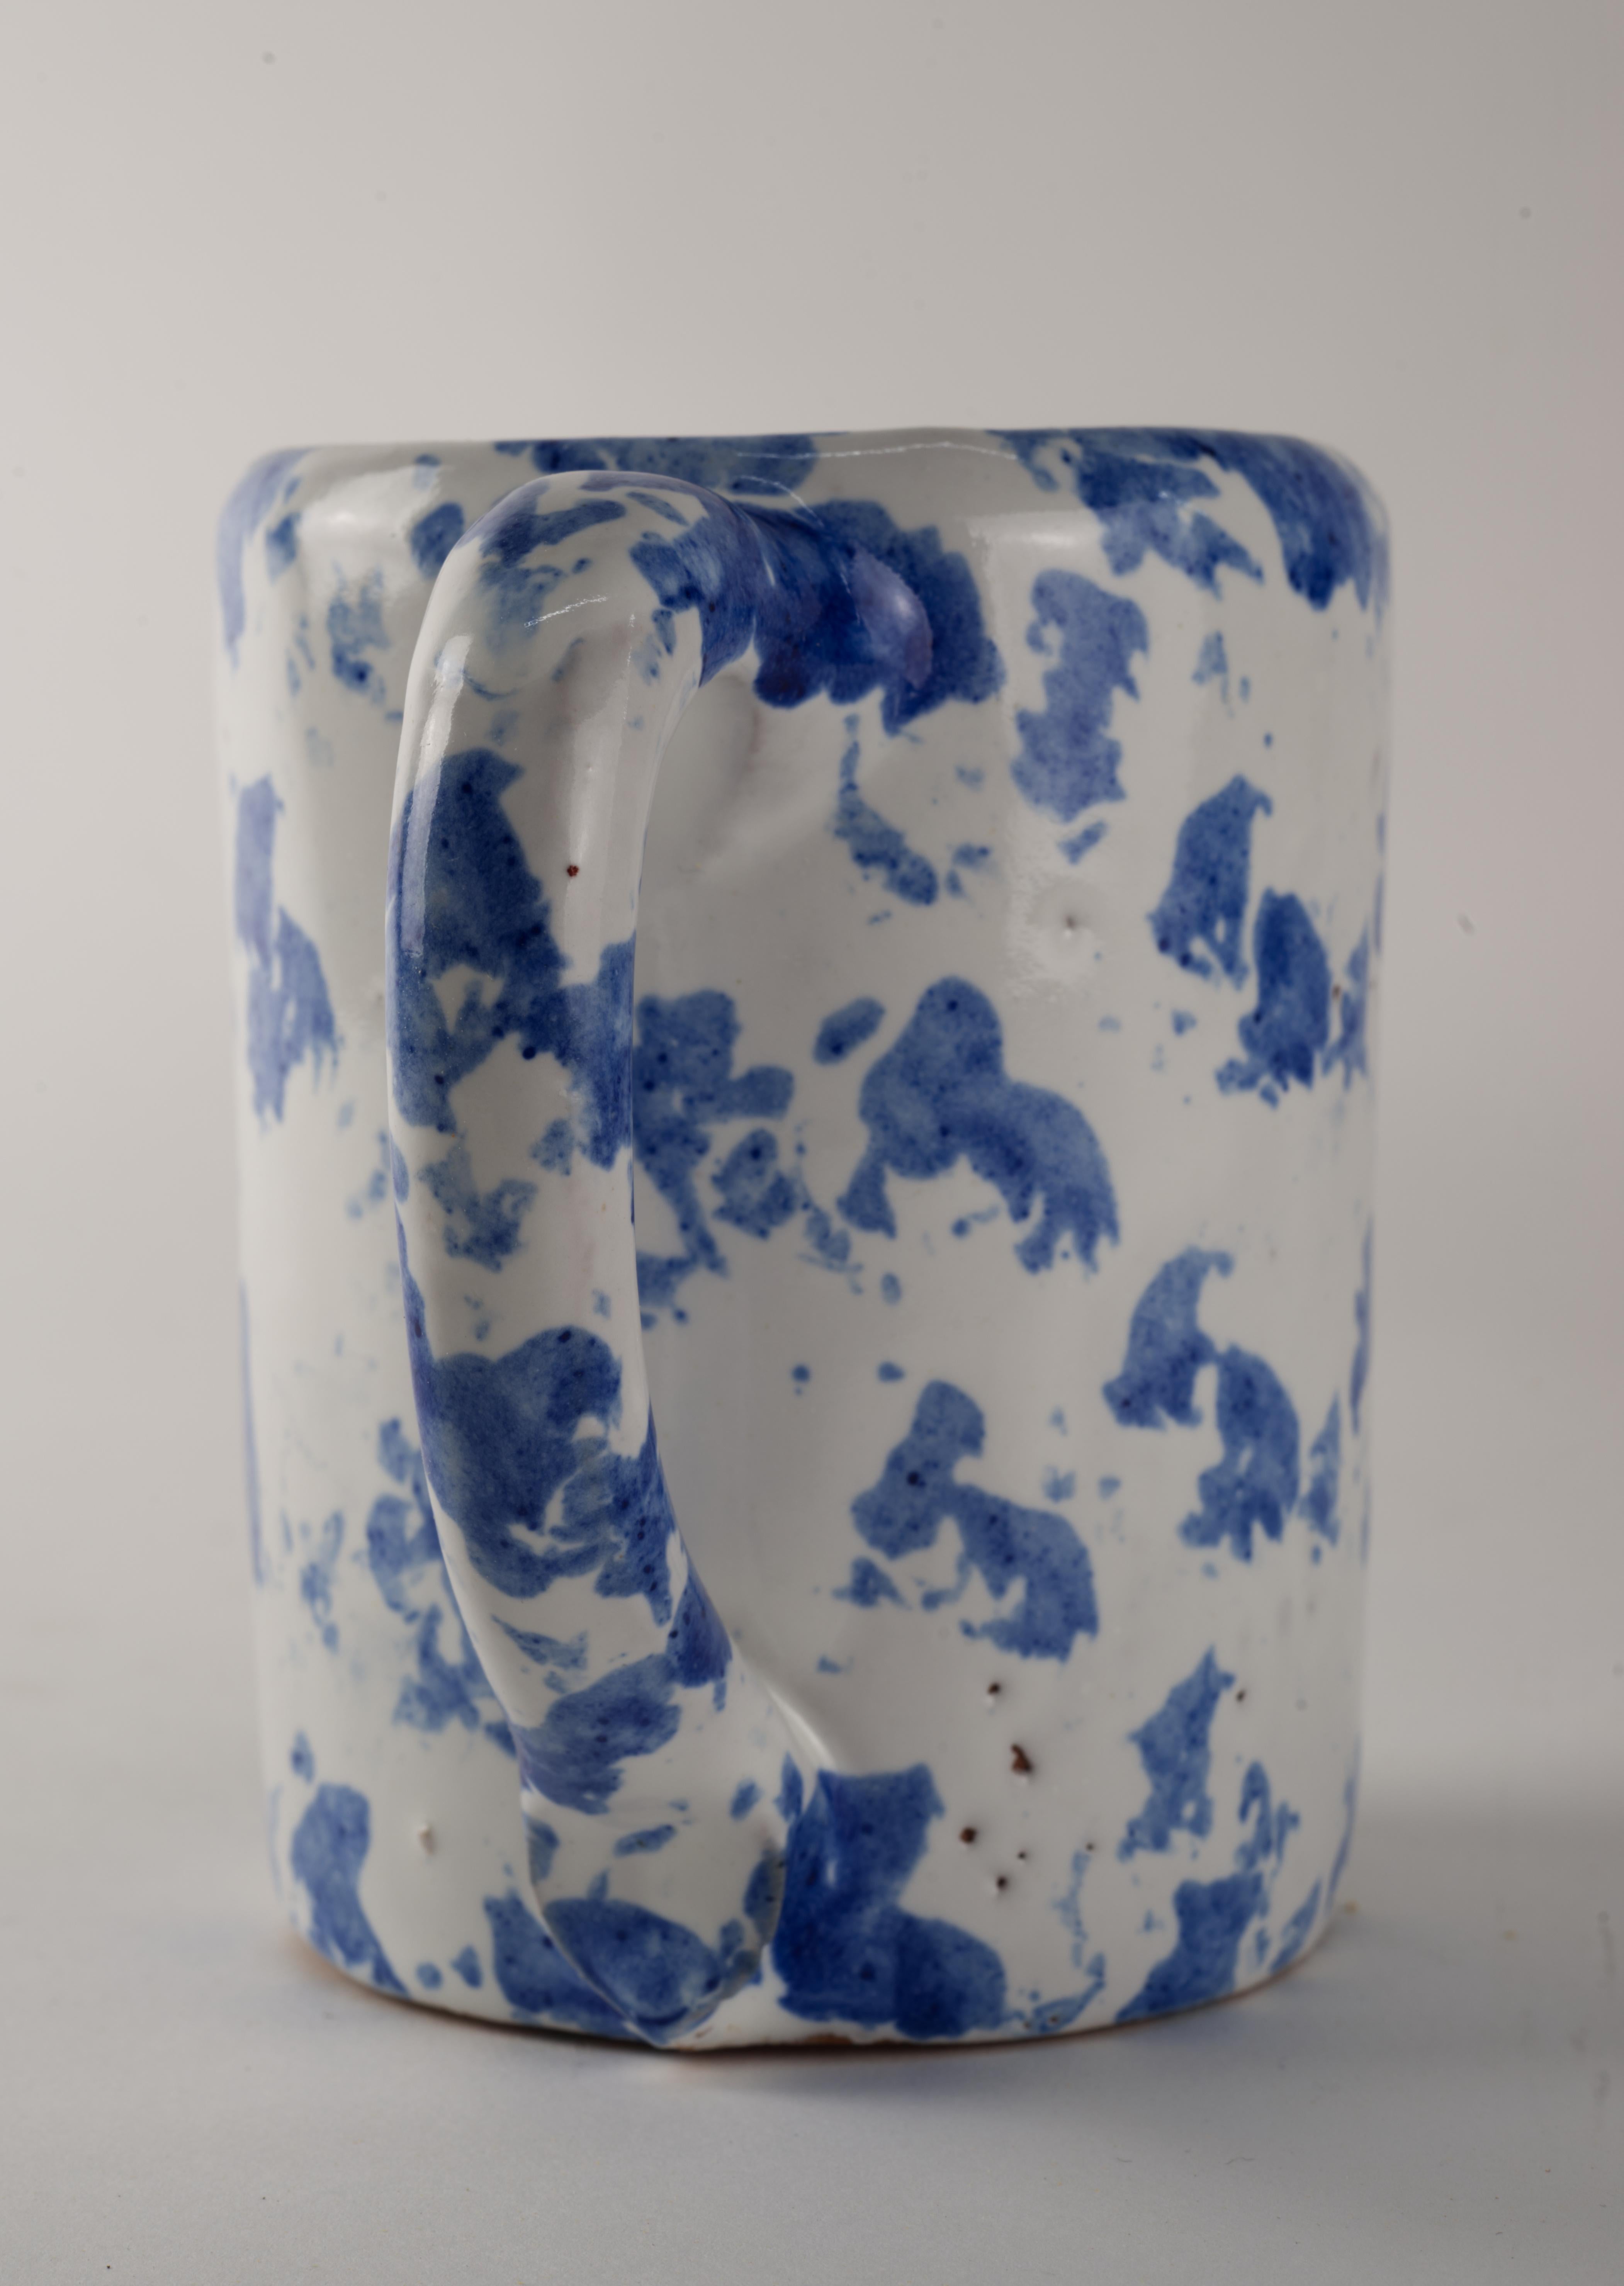 American Rare Bybee Pottery Large Mug, Blue Spongeware Kentucky Art Pottery For Sale